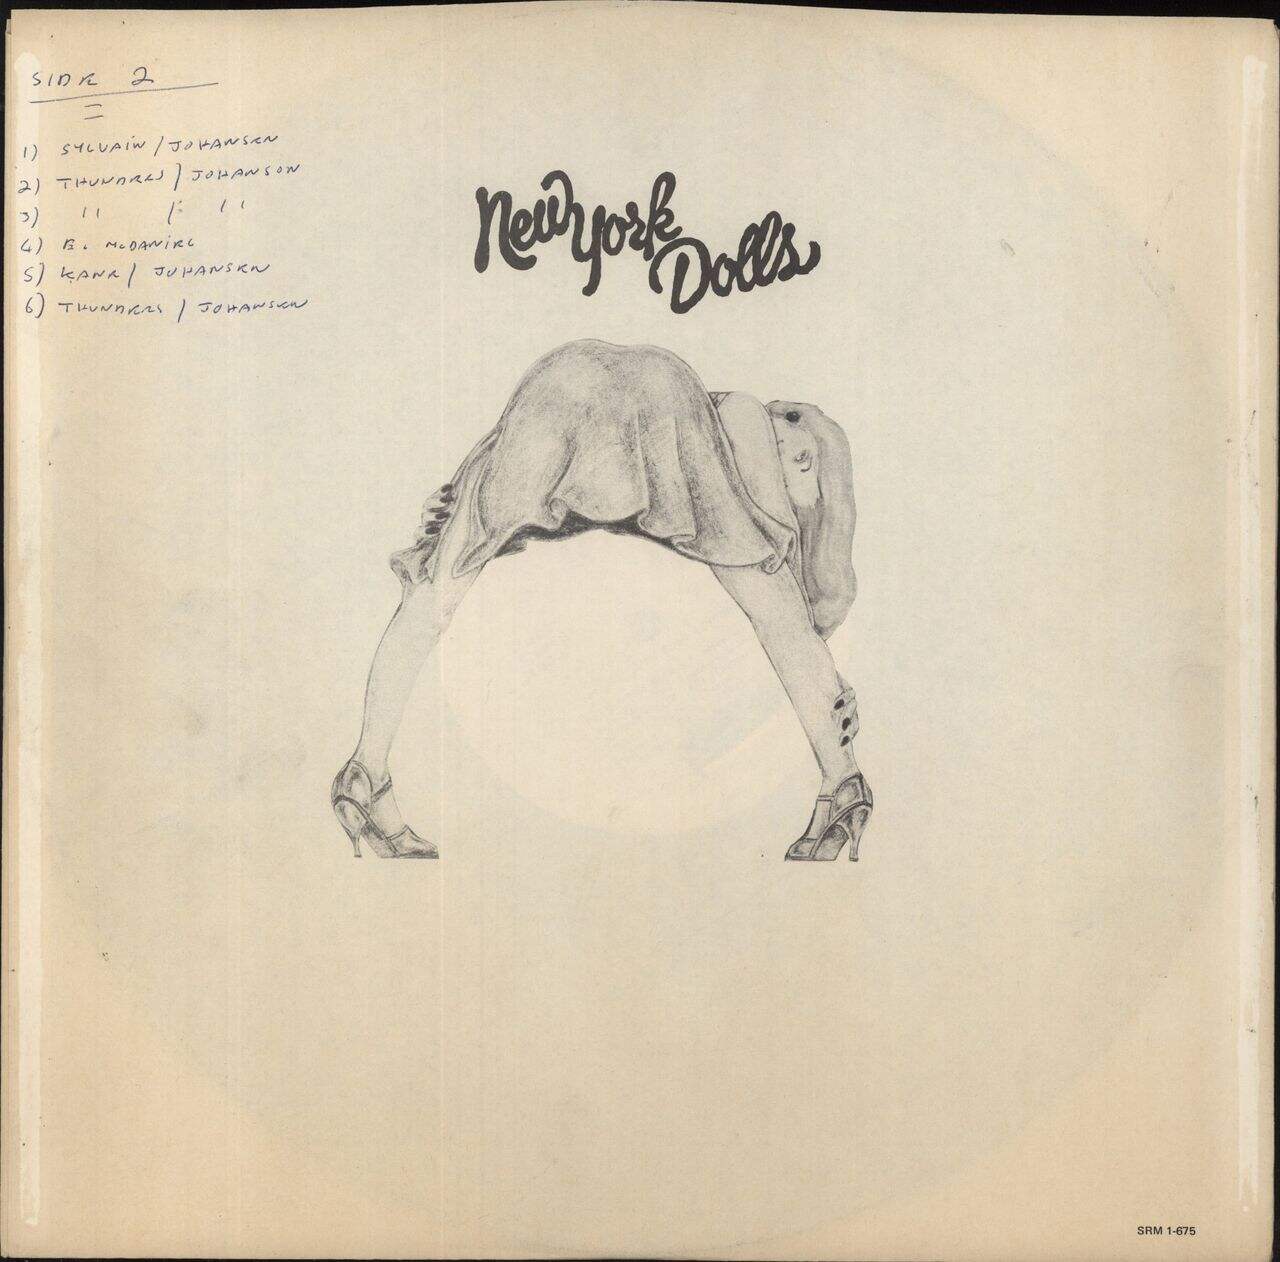 New York Dolls New York Dolls - PRC Pressing US Vinyl LP